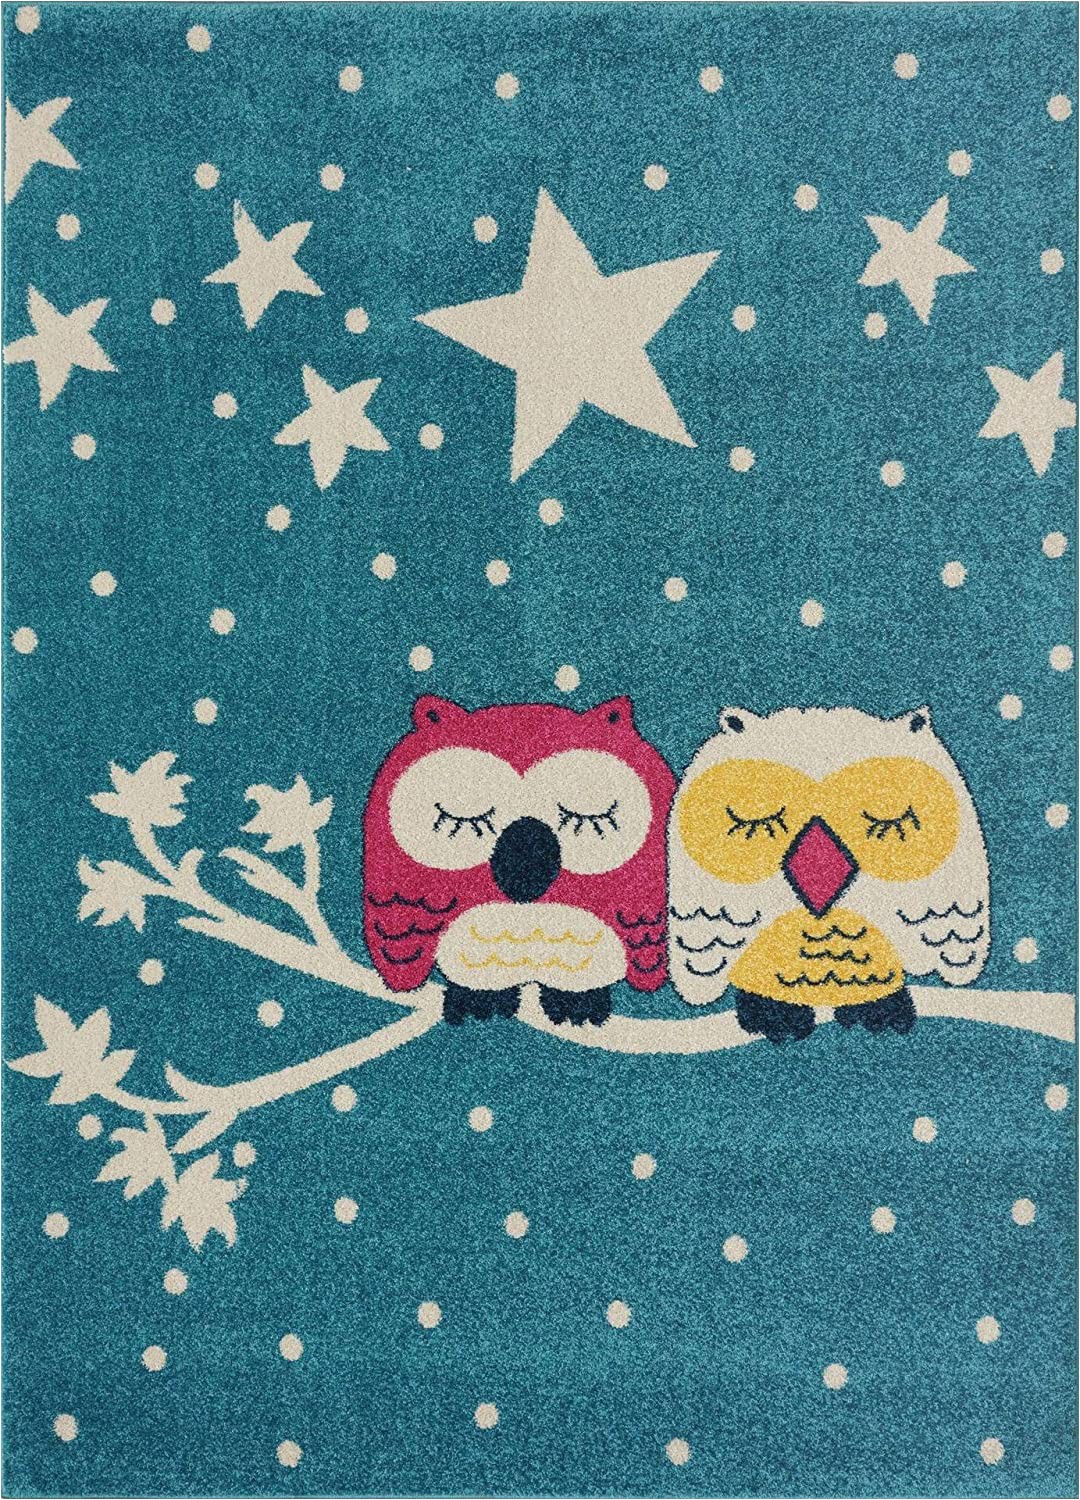 Owl area Rug for Nursery Blue Pink White soft Cute area Rug Carpet Mat with Owl Stars Animal Cartoon for Kids Little Girl Boy Room Nursery Size 6 7″x9 2″ Feet 200280 Cm and